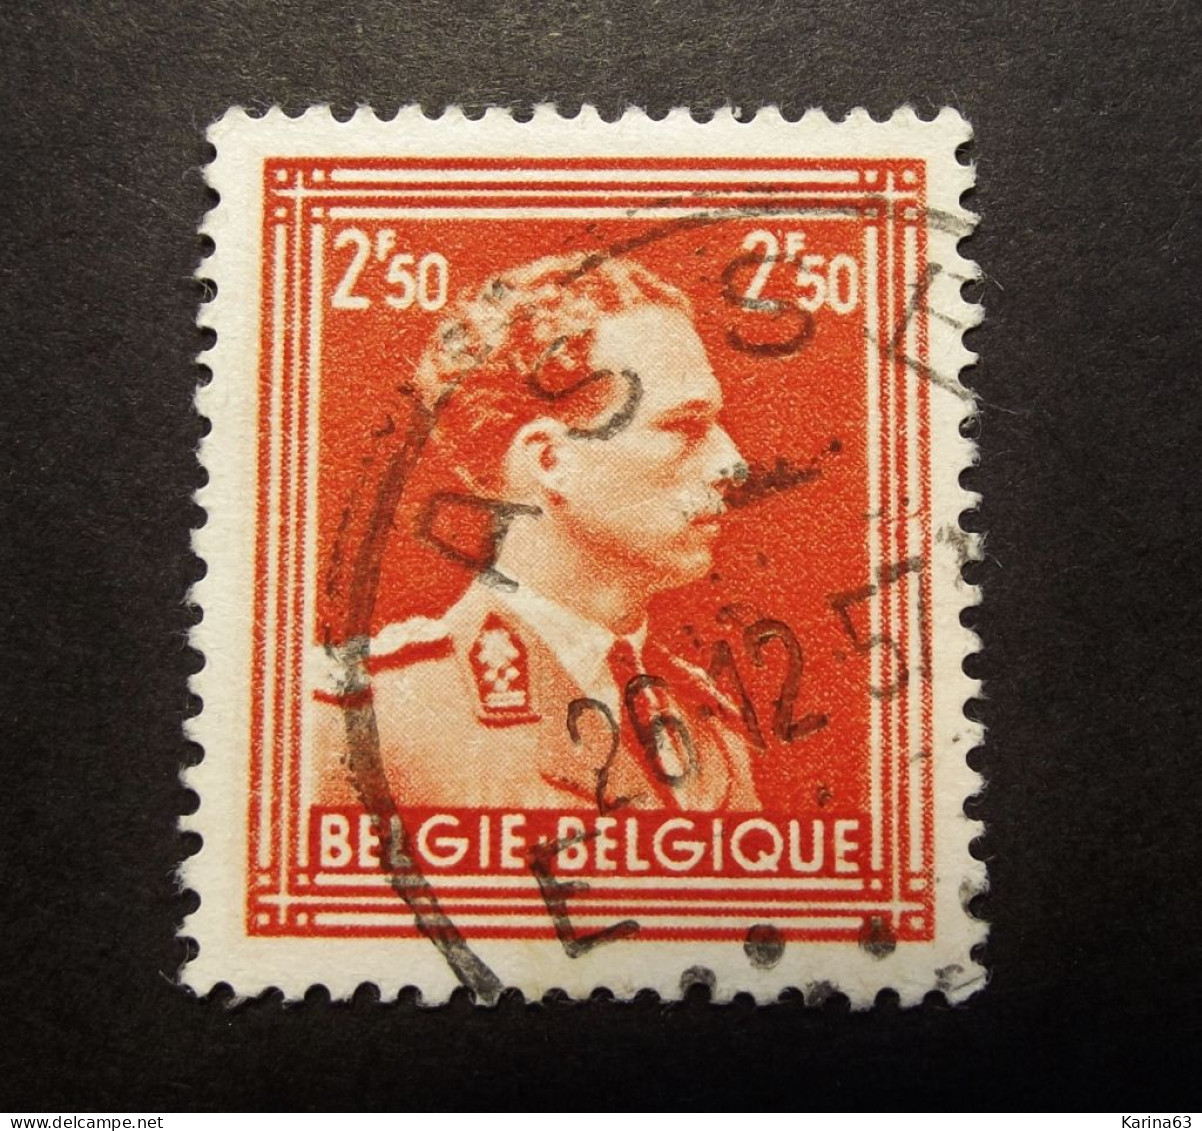 Belgie Belgique - 1951-  OPB/COB  N° 886  - 2 Fr 50  - Obl.  -  ASSE - 1957 - Gebruikt